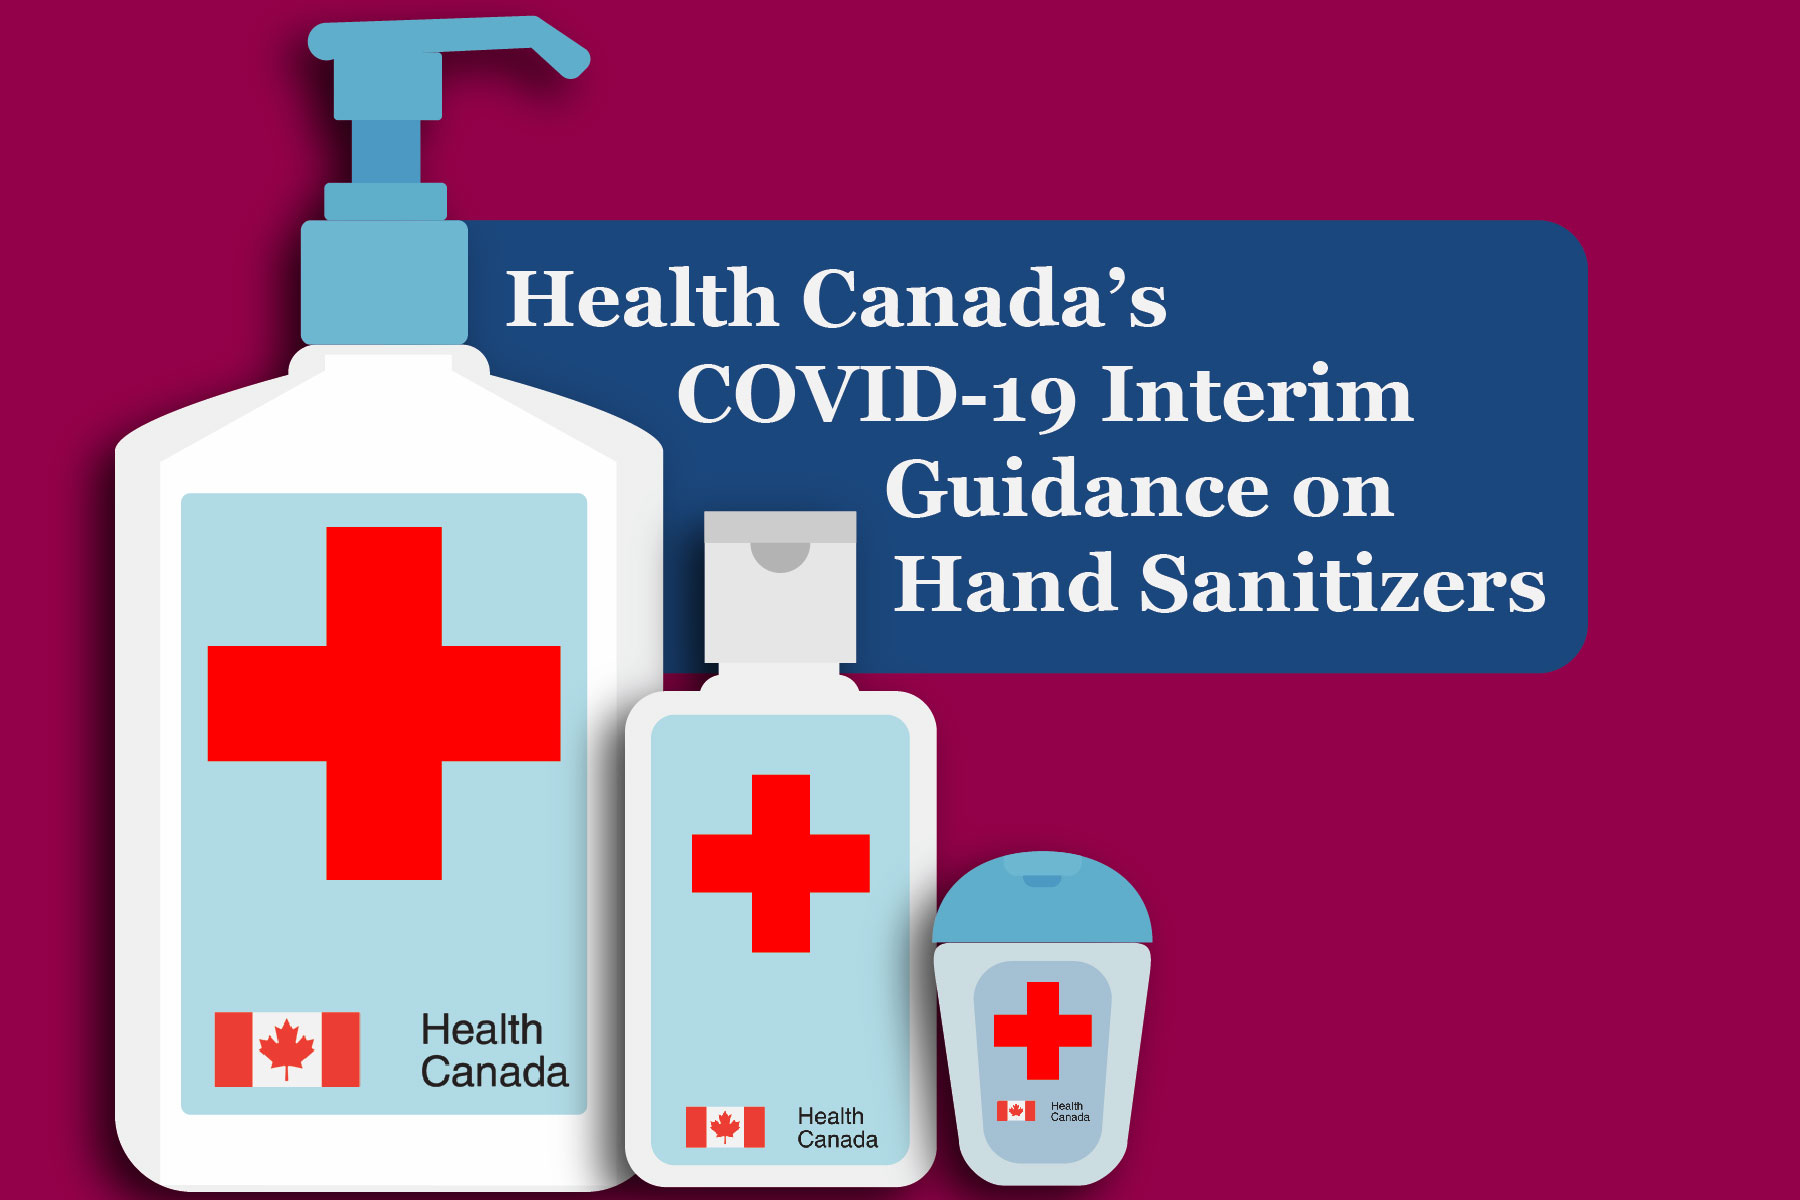 Health Canada’s COVID-19 Interim Guidance on Hand Sanitizers